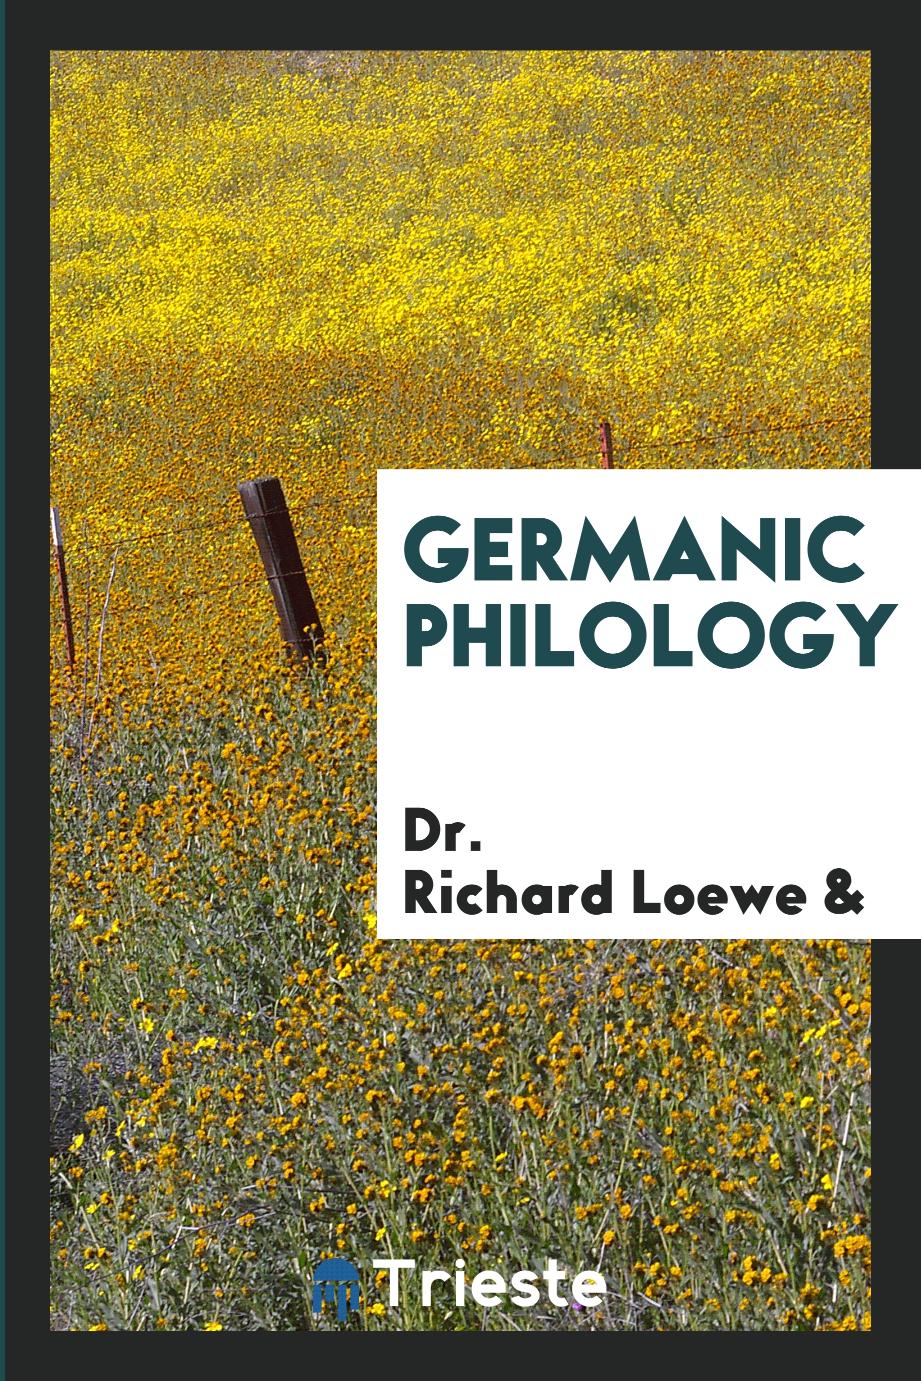 Germanic philology